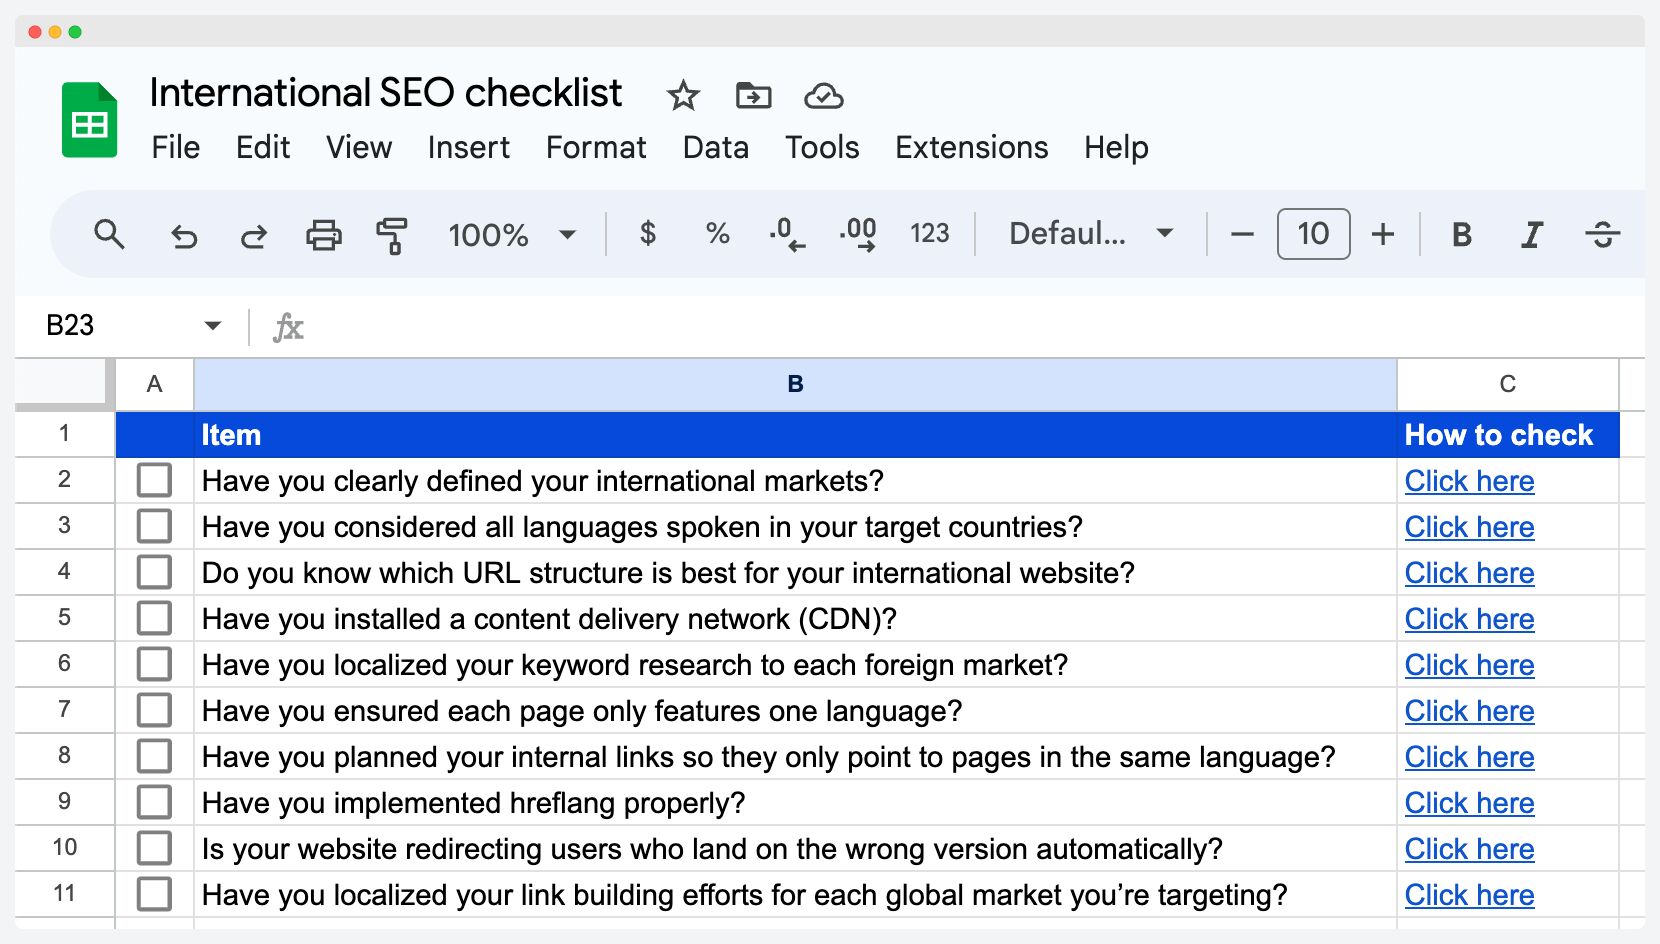 international-seo-checklist-in-google-sheets